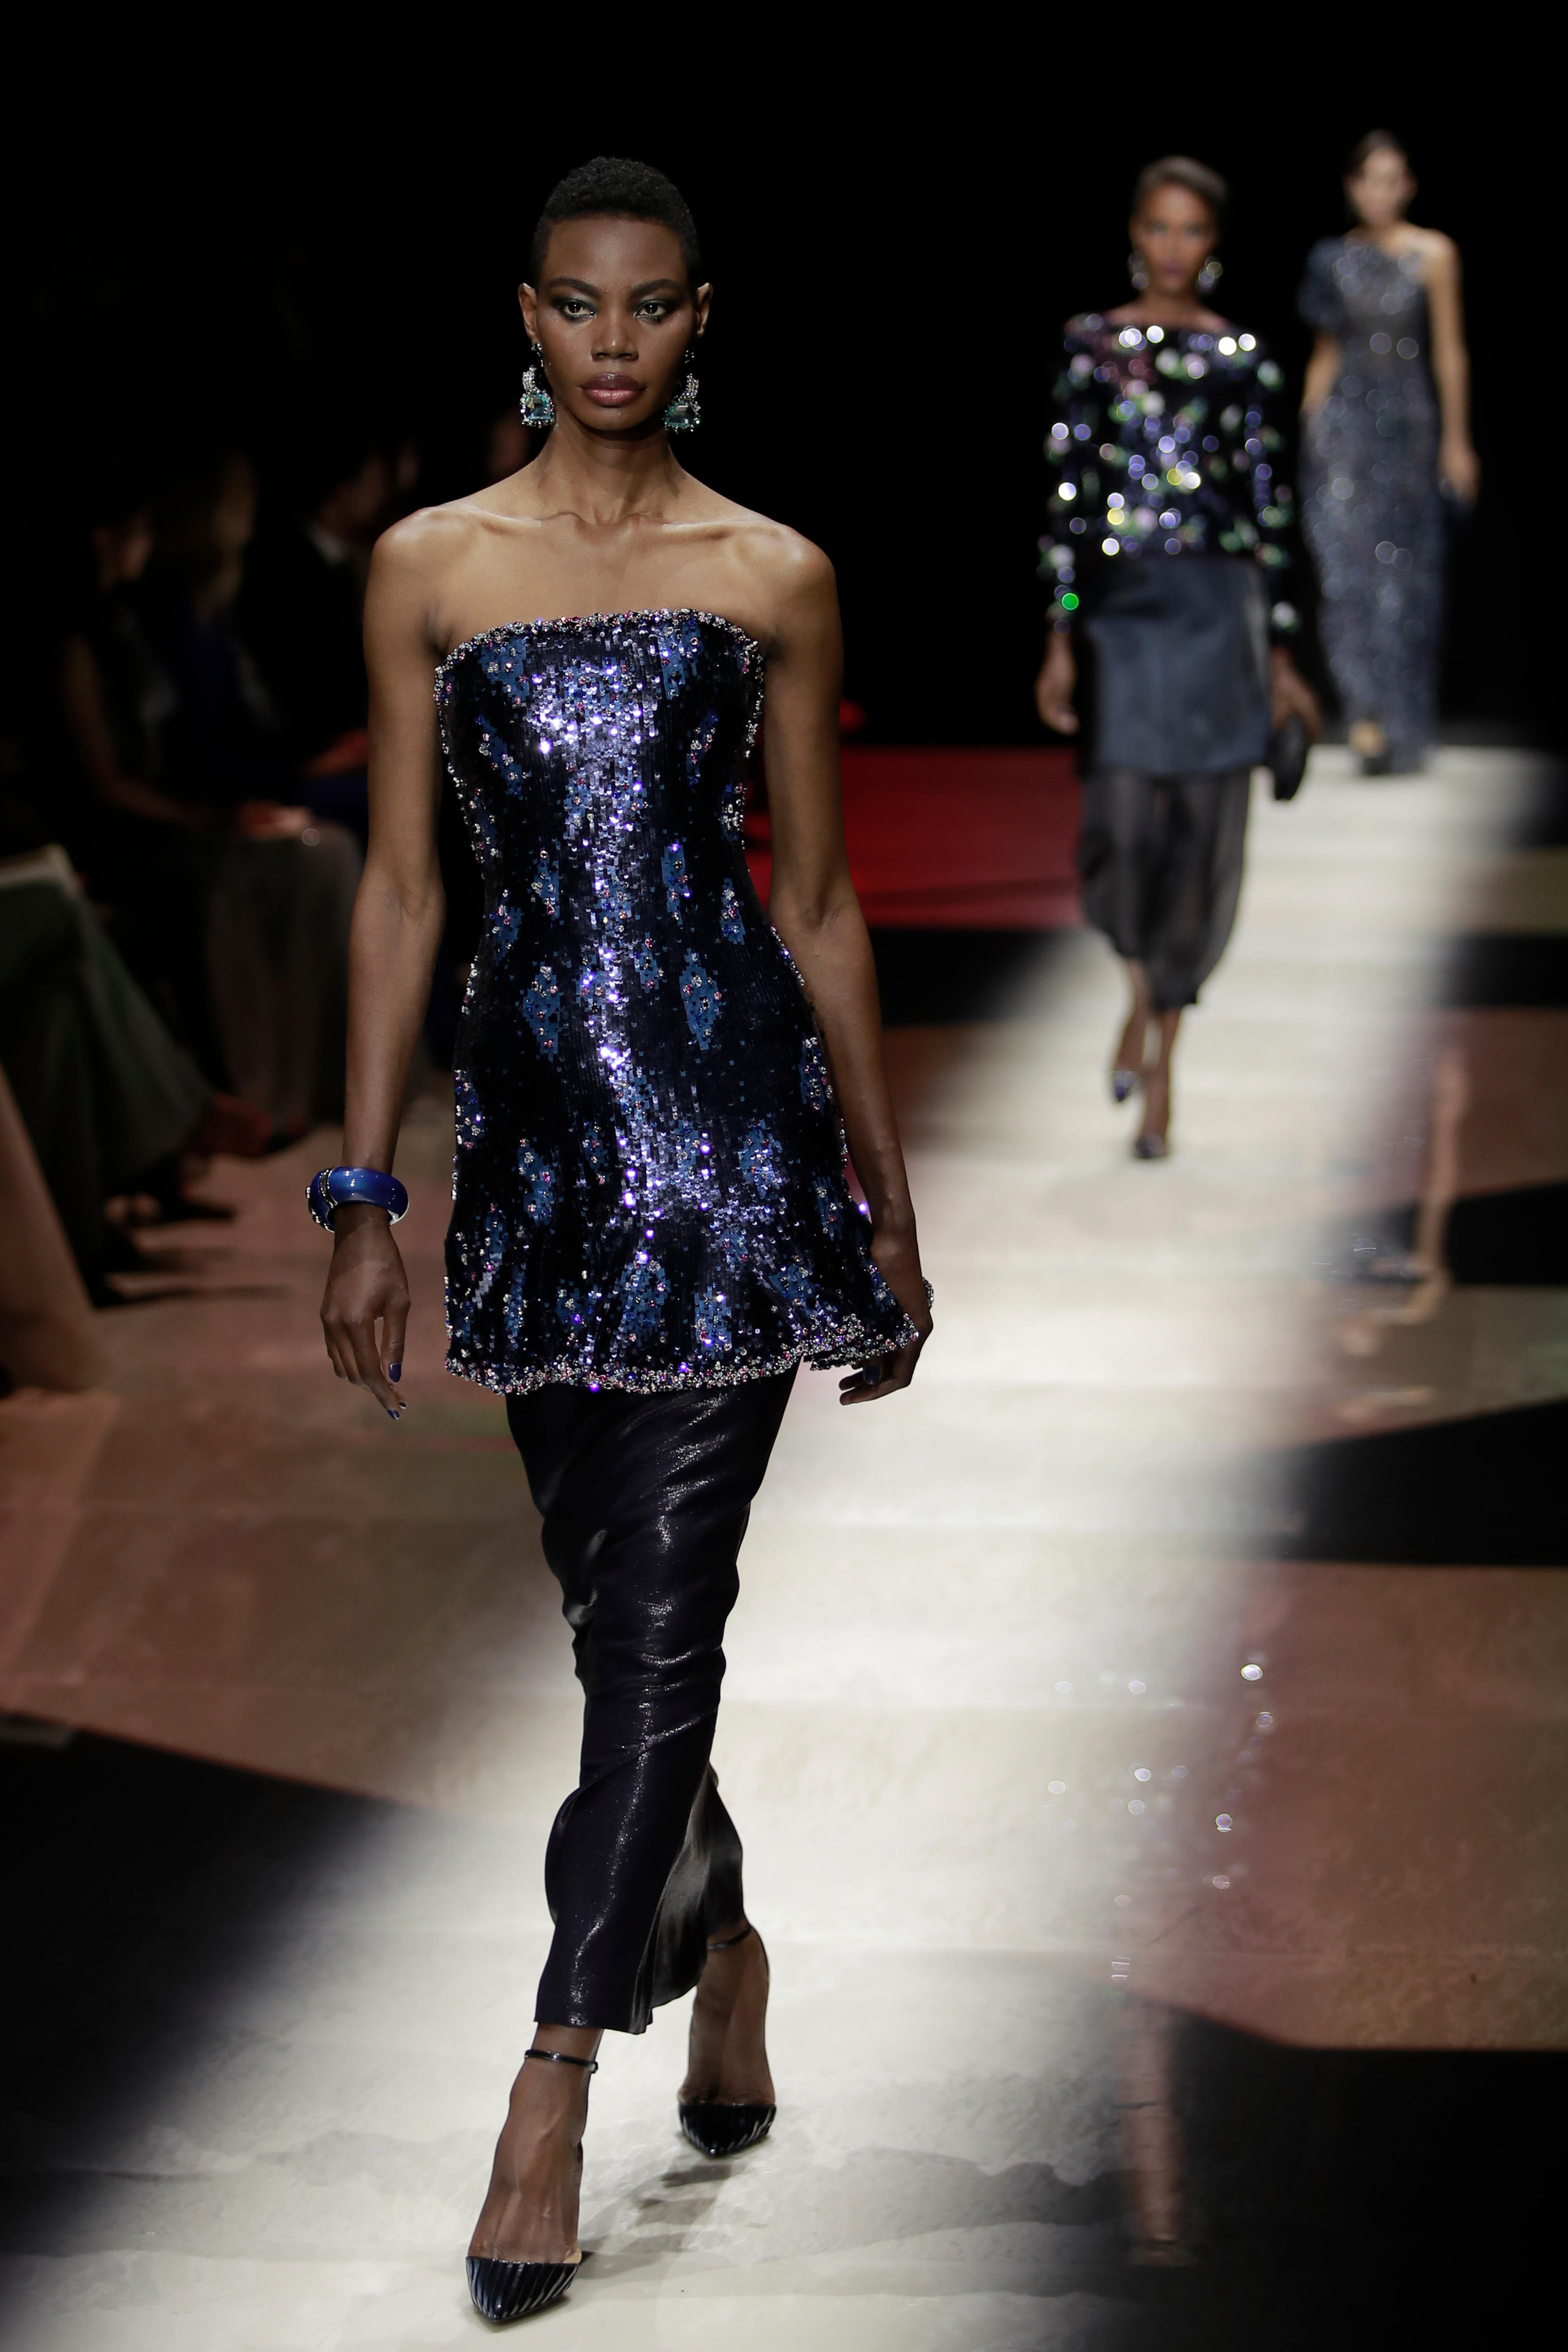 A model wears a blue sequined dress over shiny black pants. 